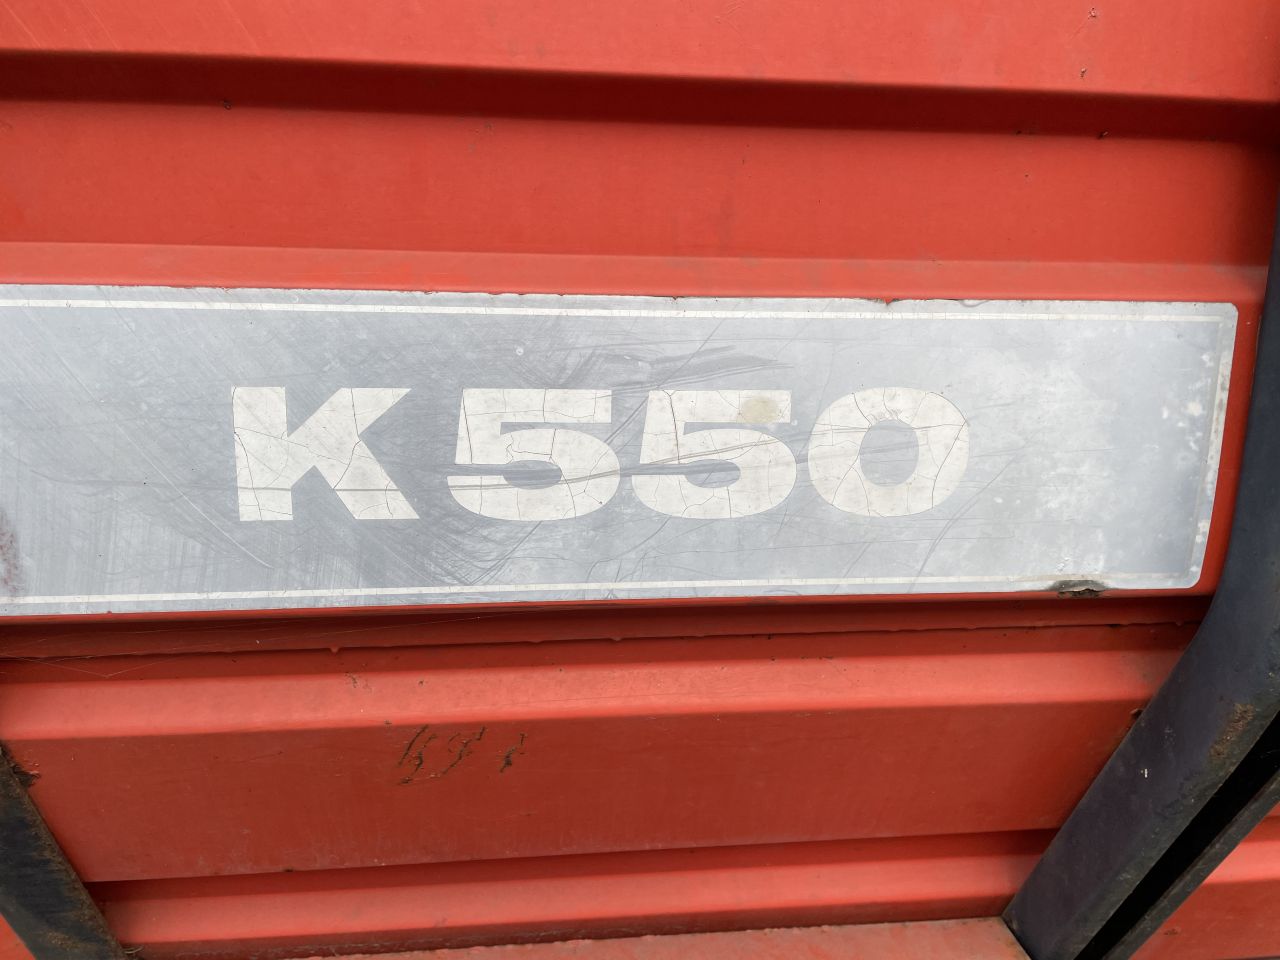 Deutz-Fahr K550 loading wagon / loader wagon